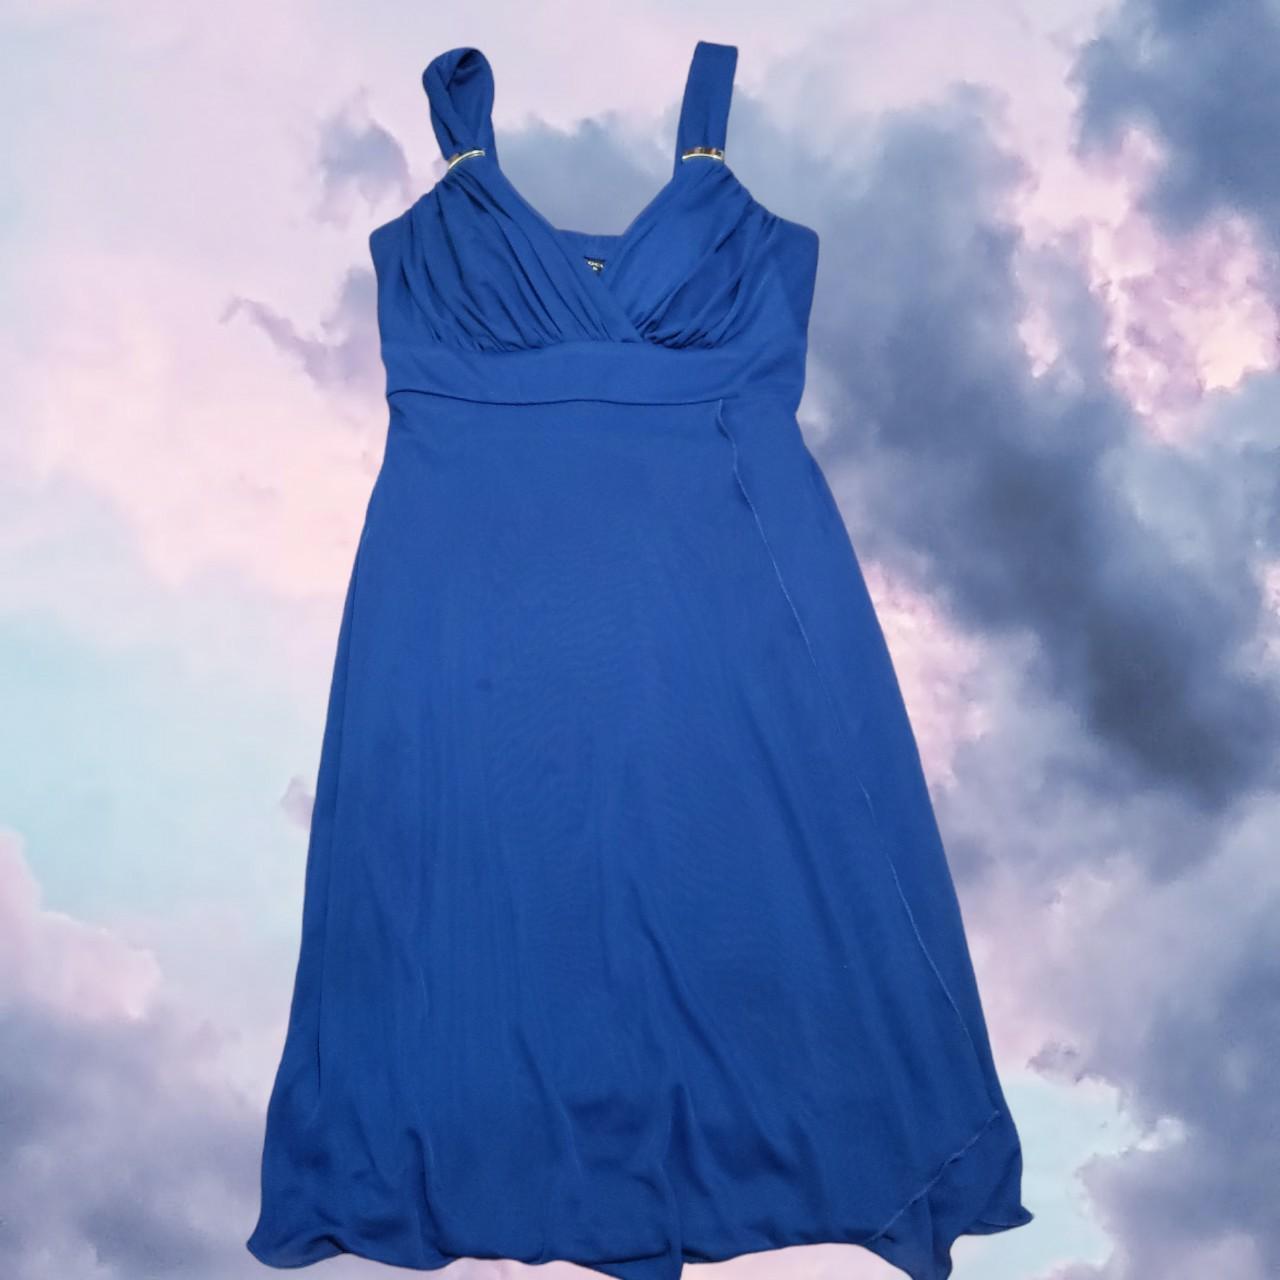 Product Image 1 - Enfocuse studio simple blue dress